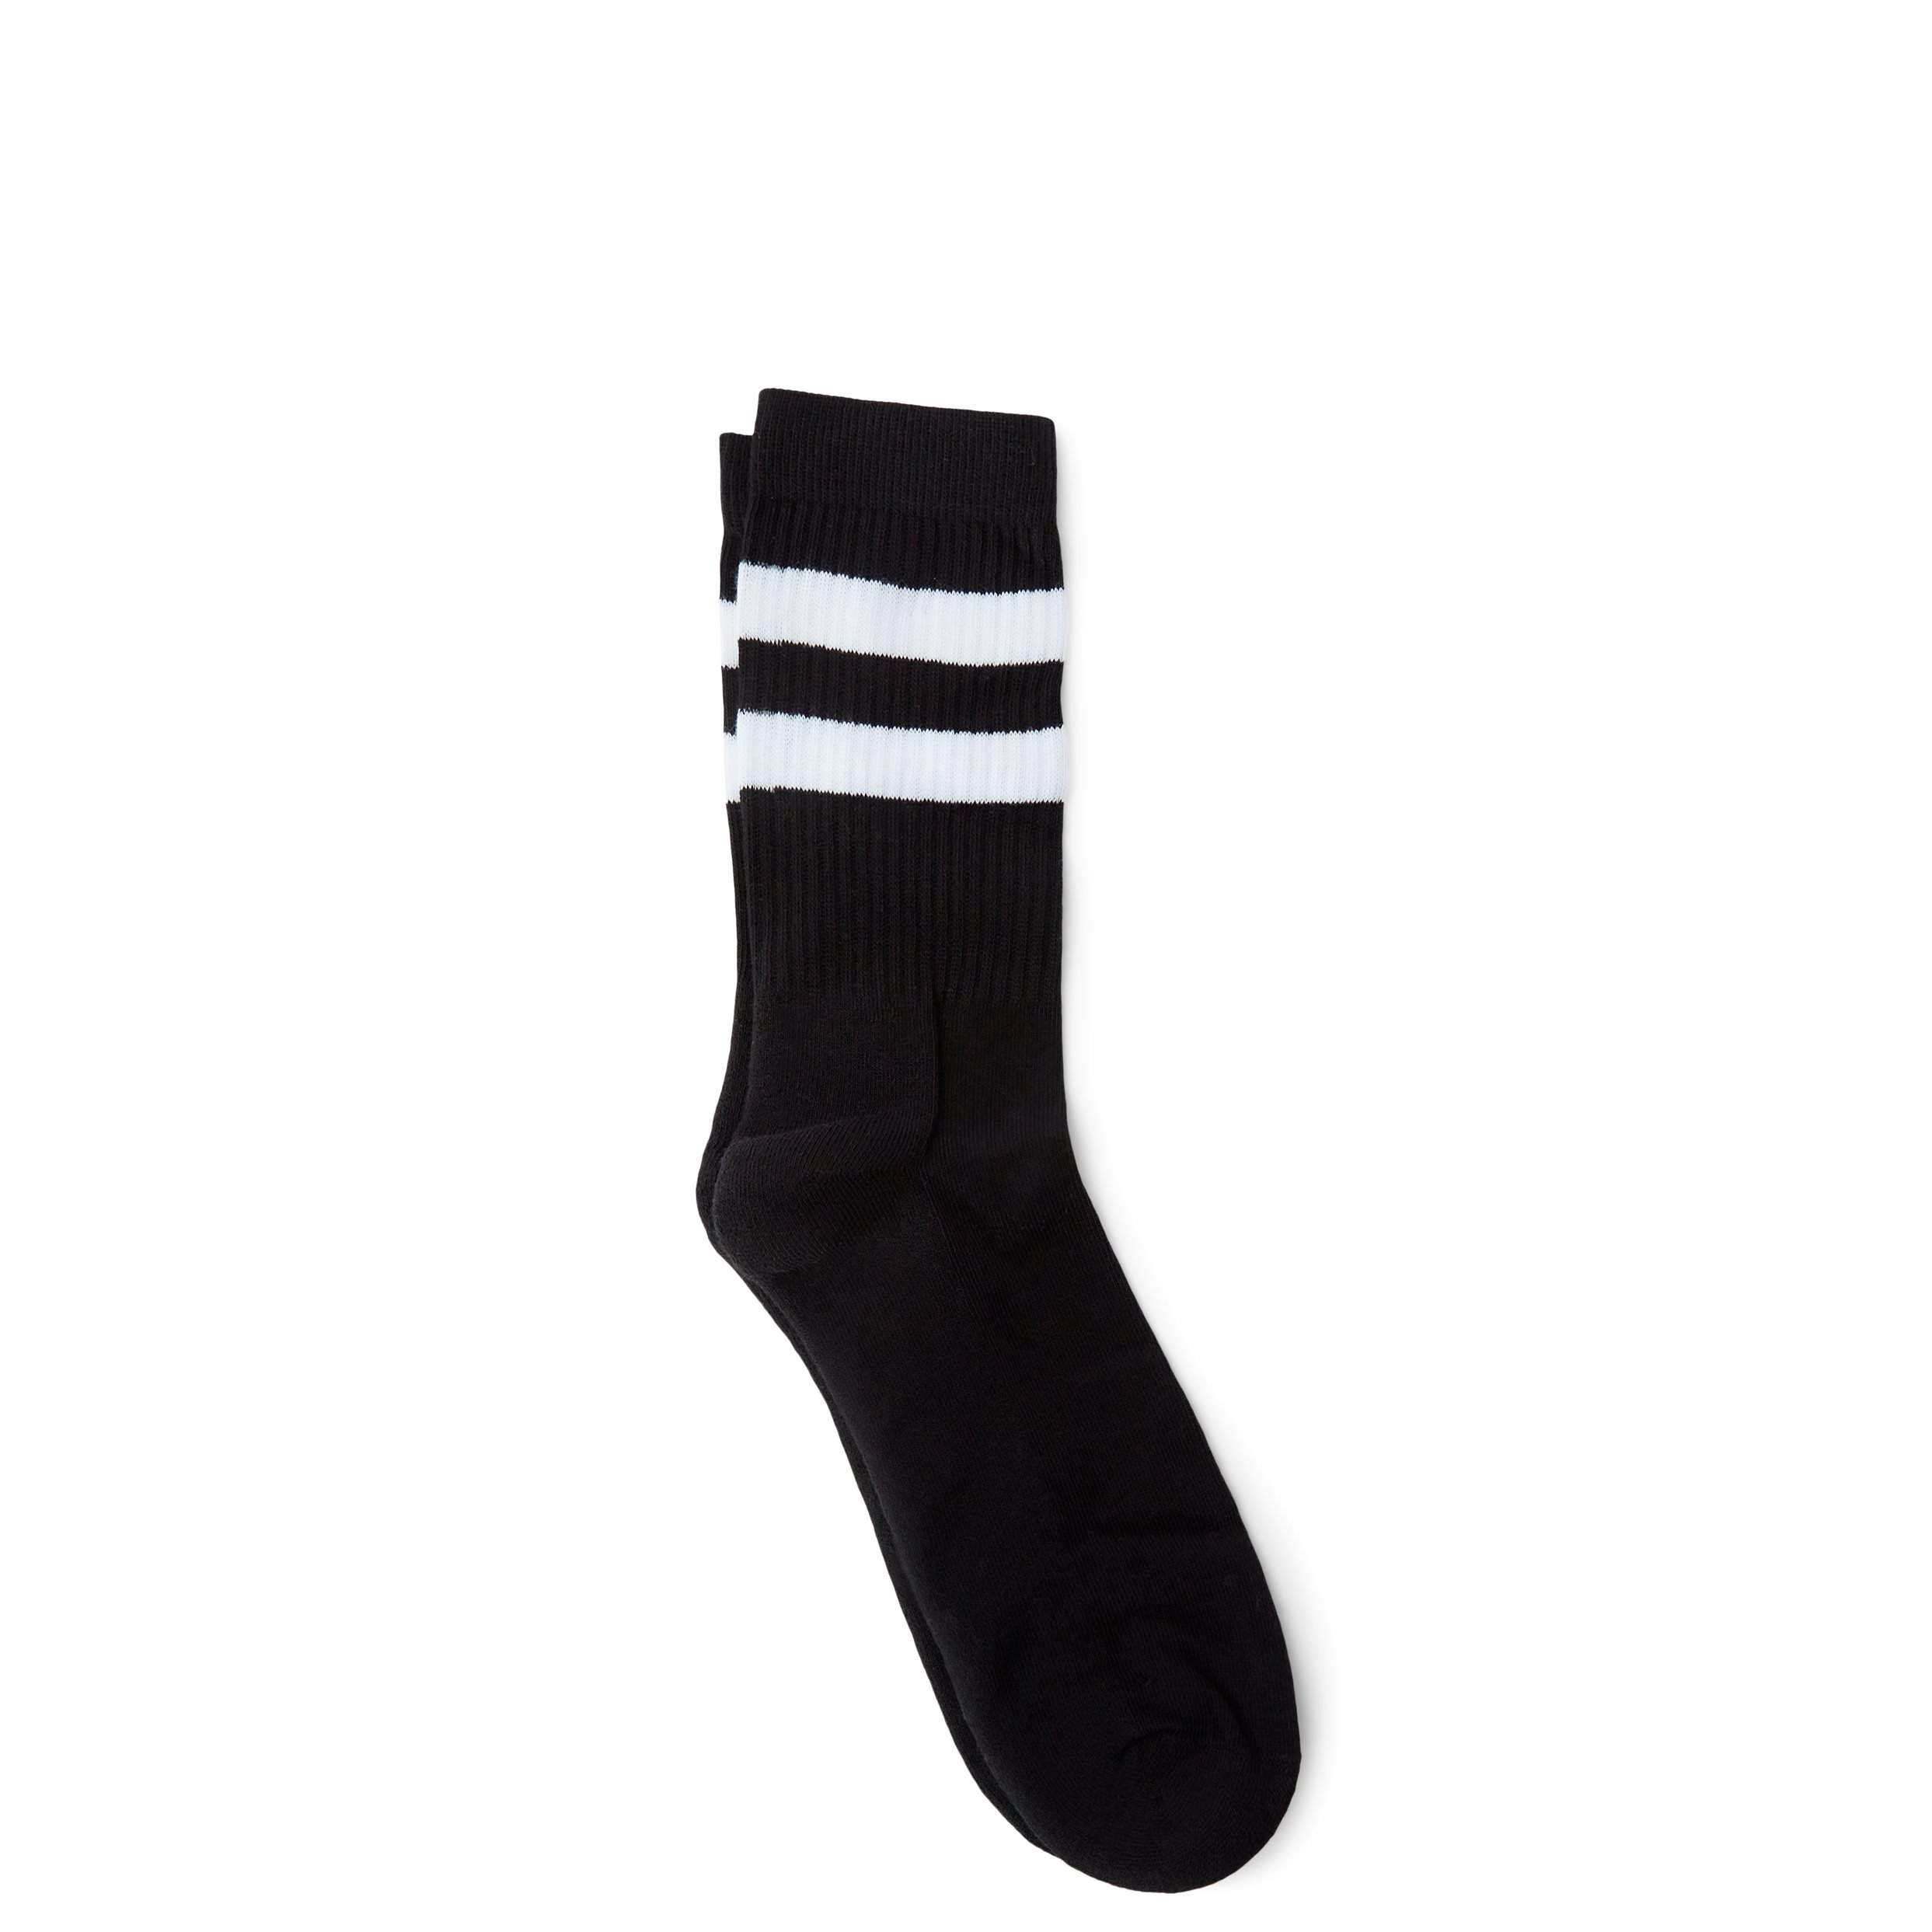 qUINT Socks TENNIS 115-12527 Black